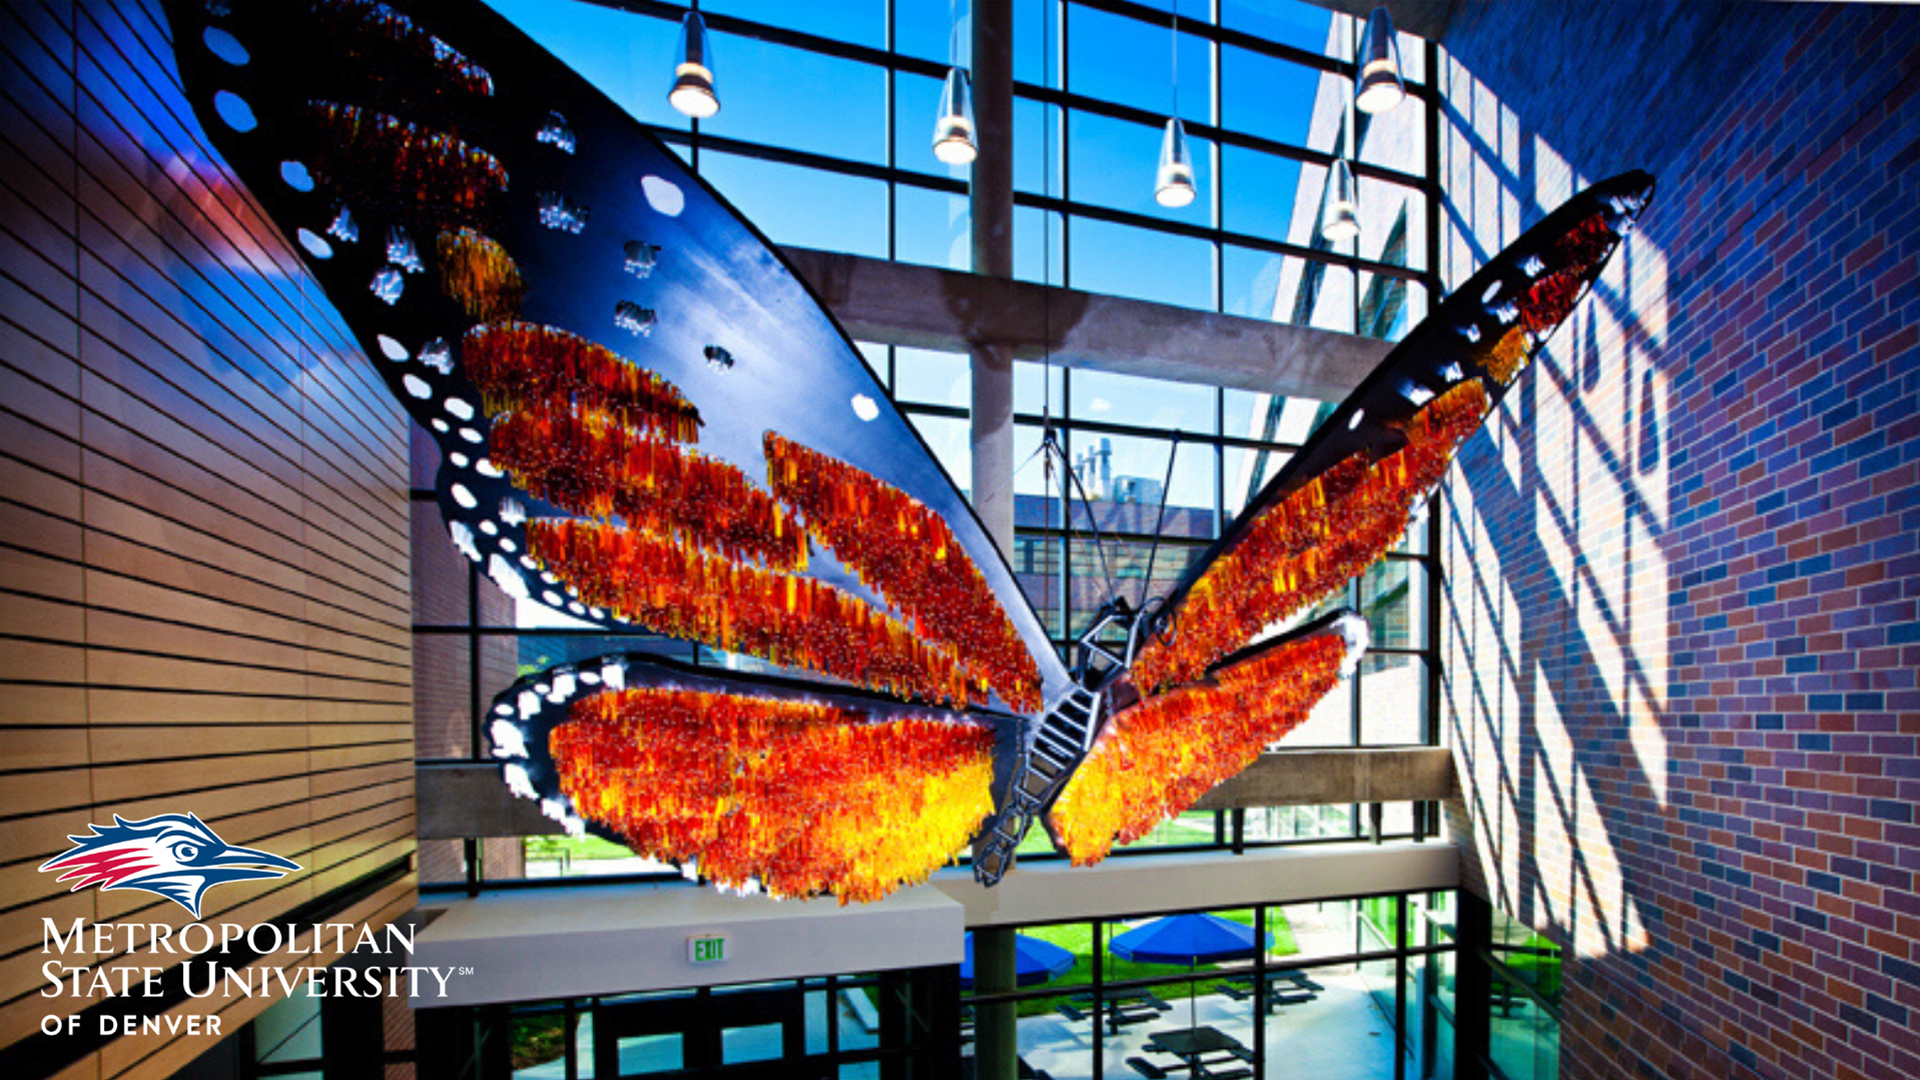 Butterfly art piece in Science building